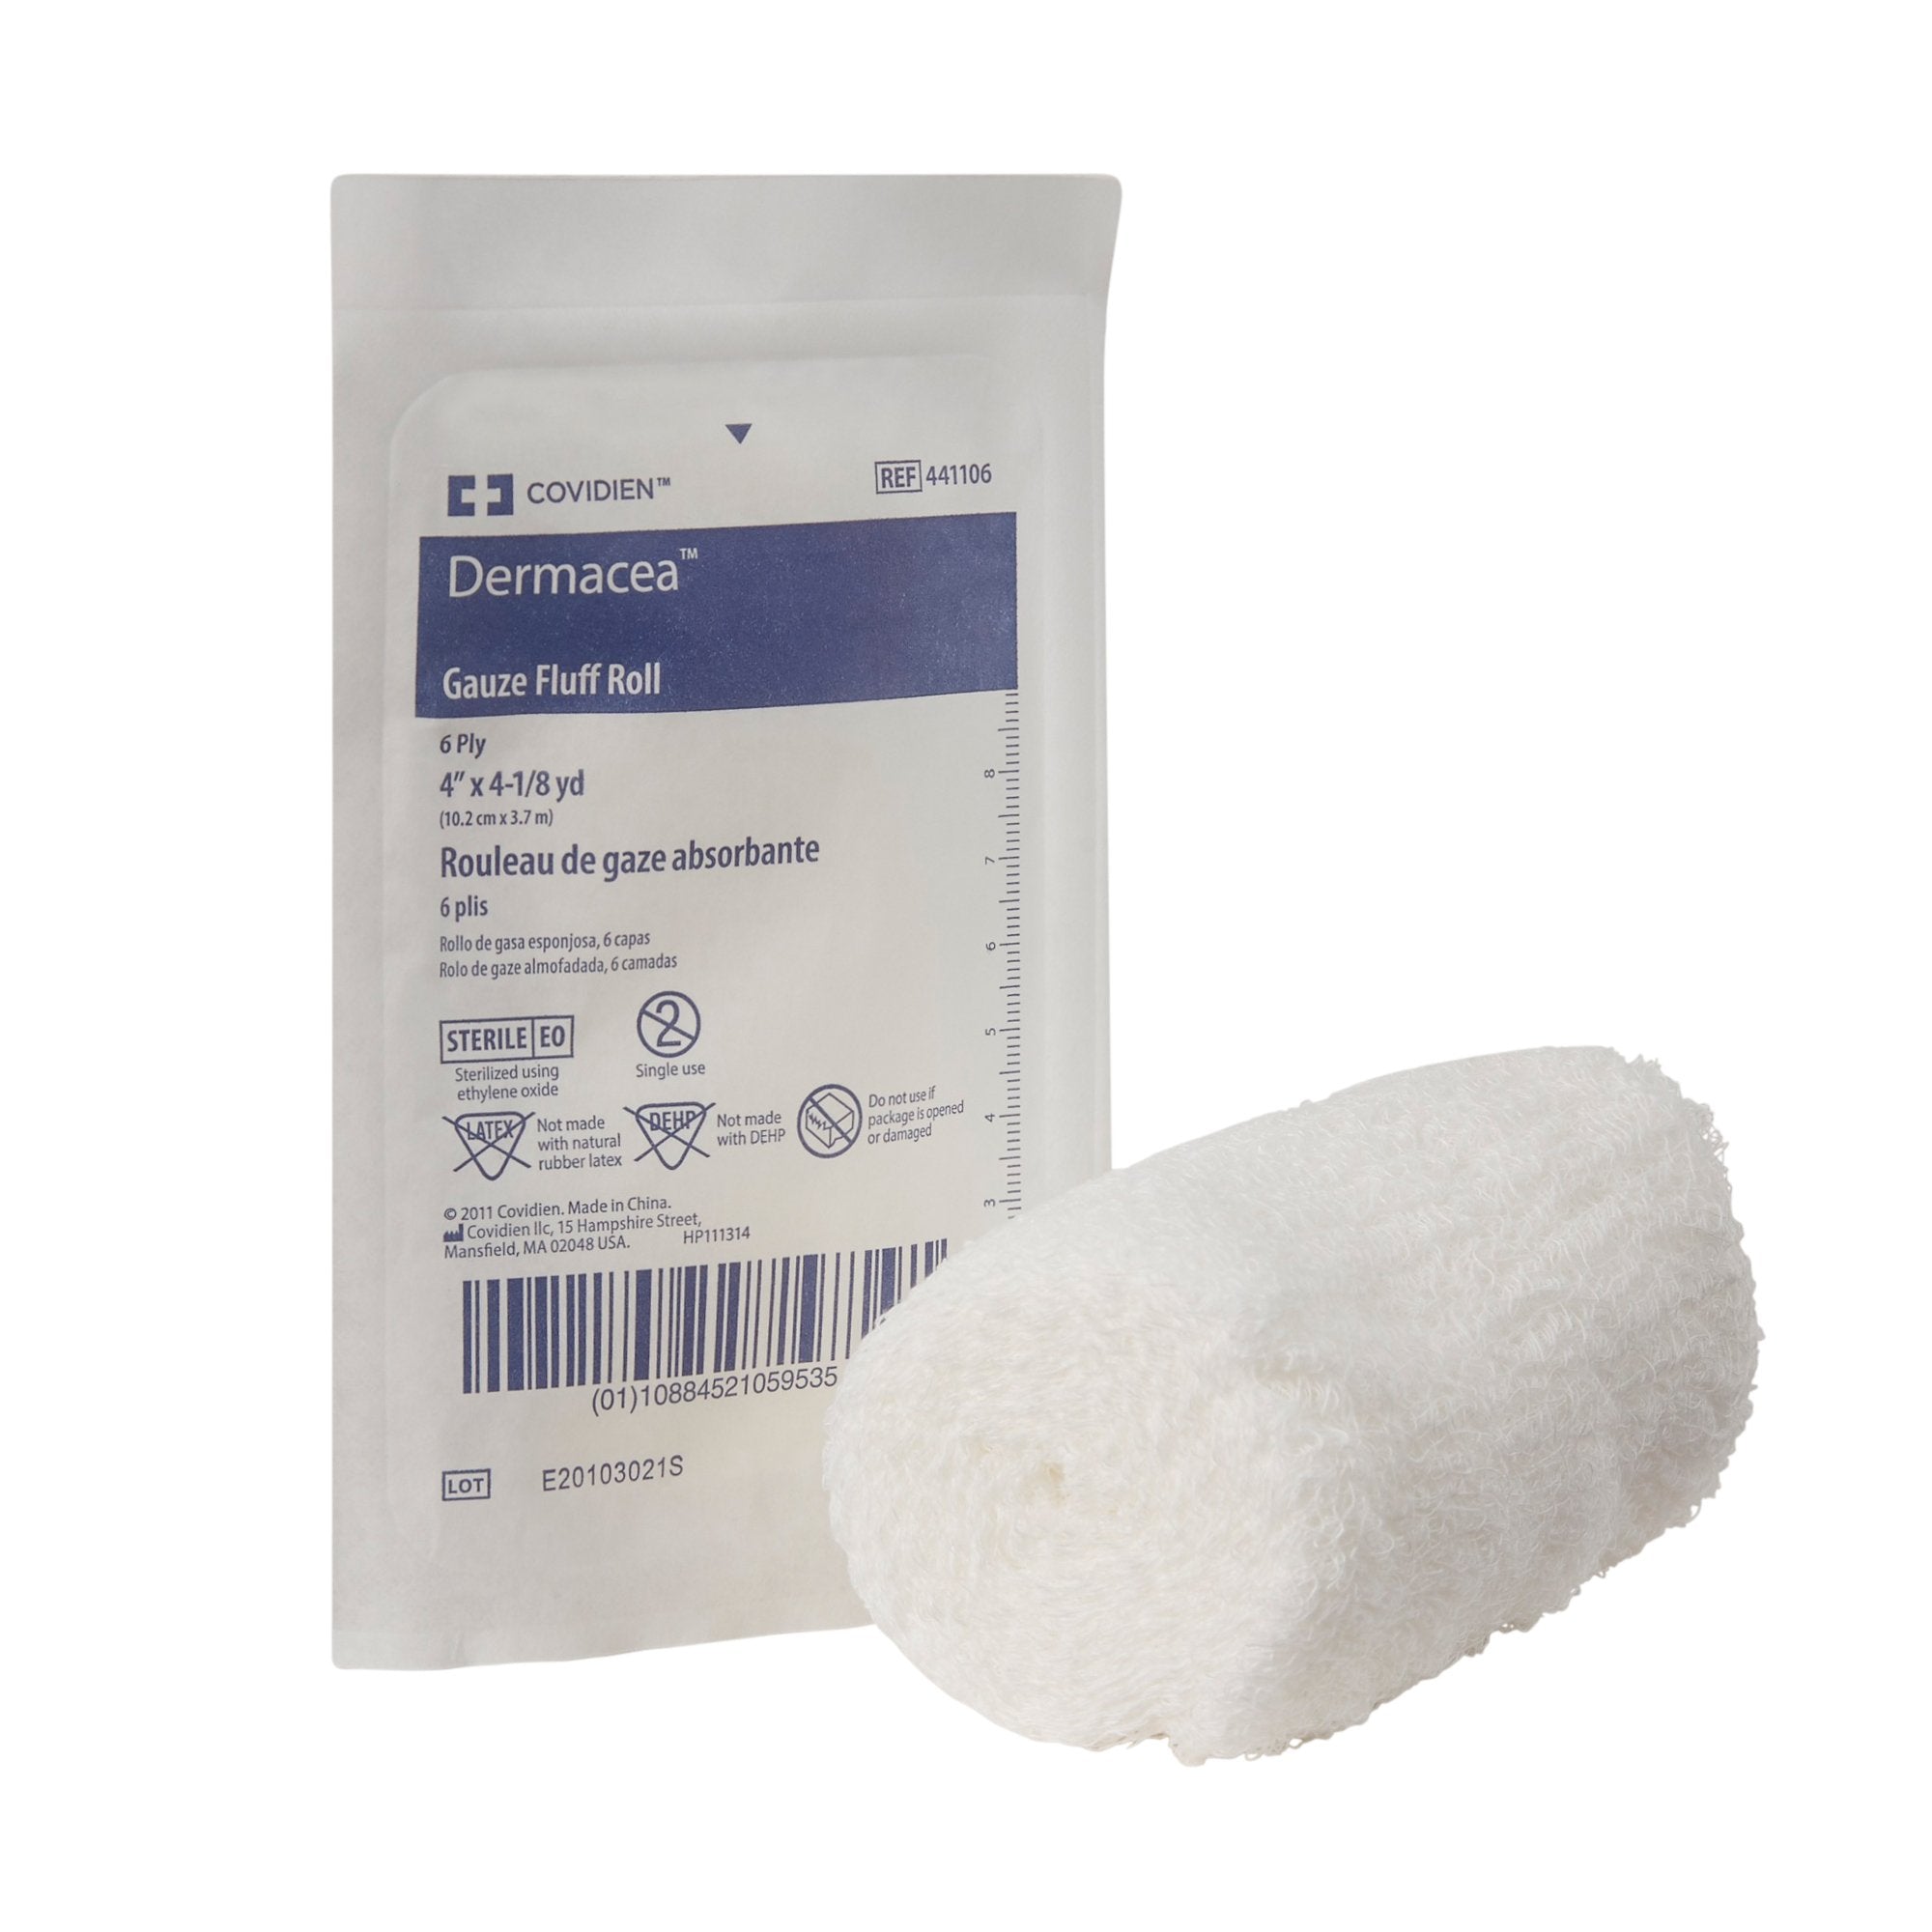 Fluff Bandage Roll Dermacea™ 4 Inch X 4-1/8 Yard 1 per Pouch Sterile 6-Ply Roll Shape